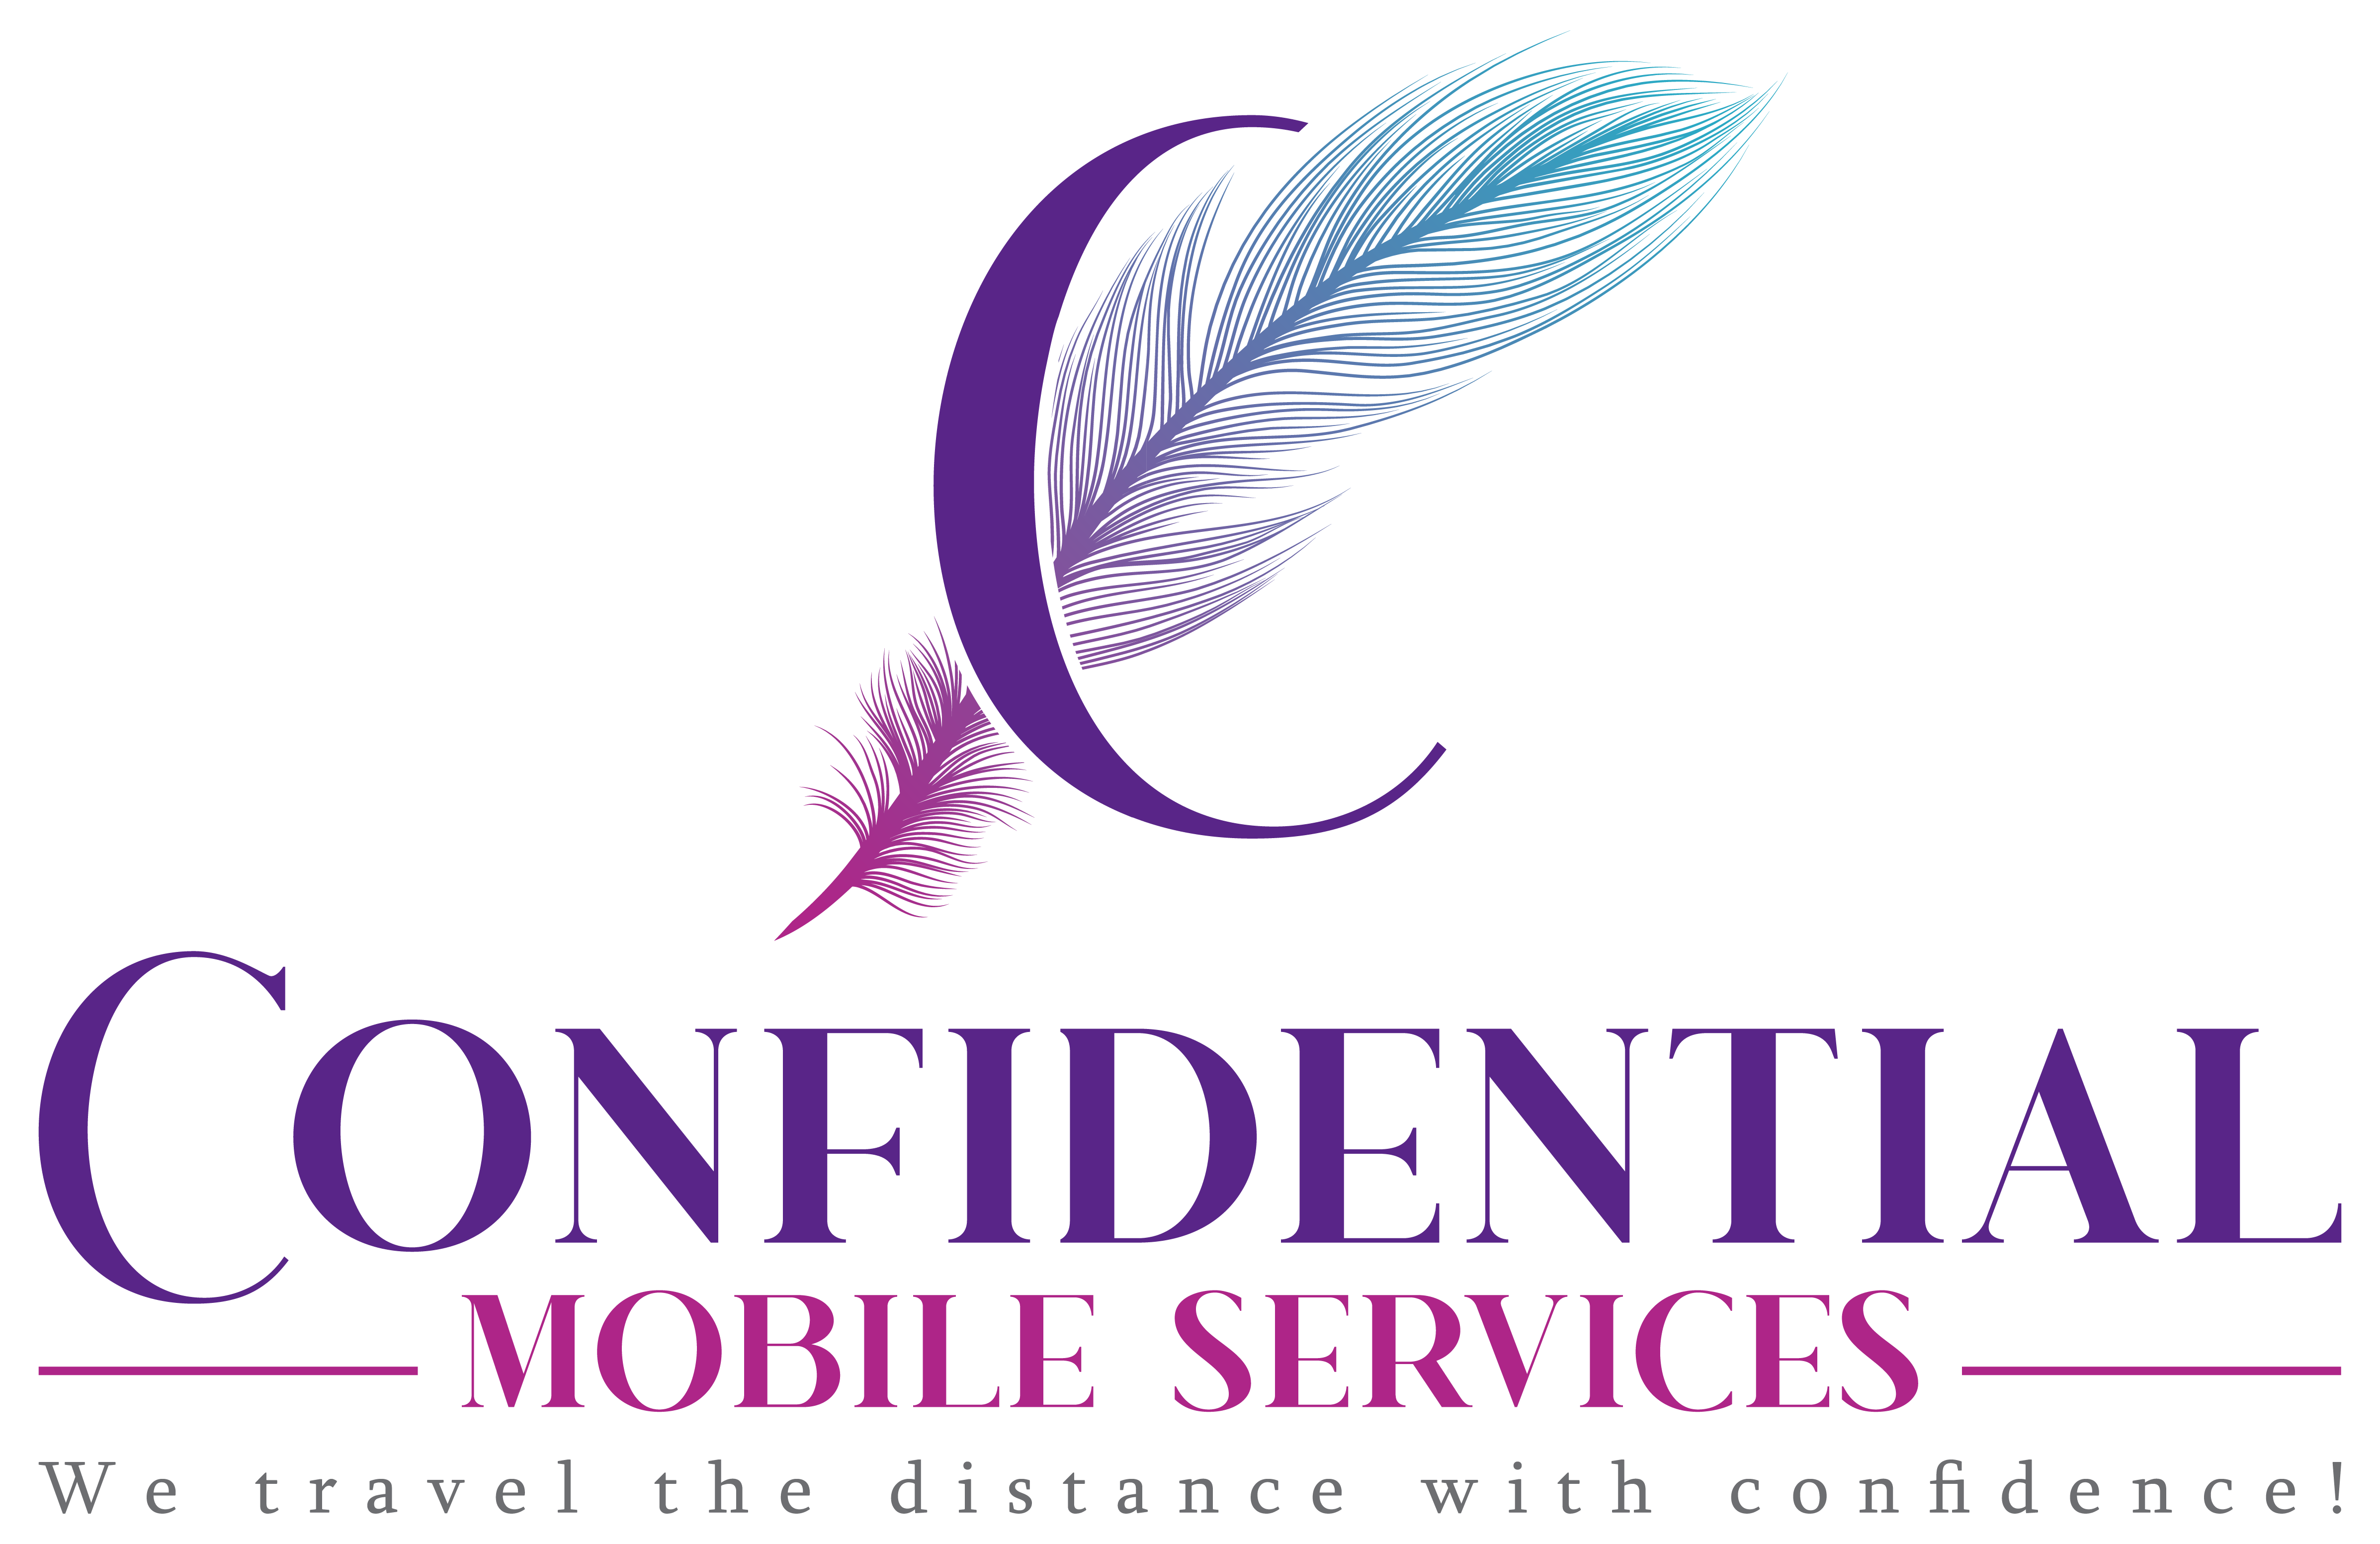 Confidential Mobile Services